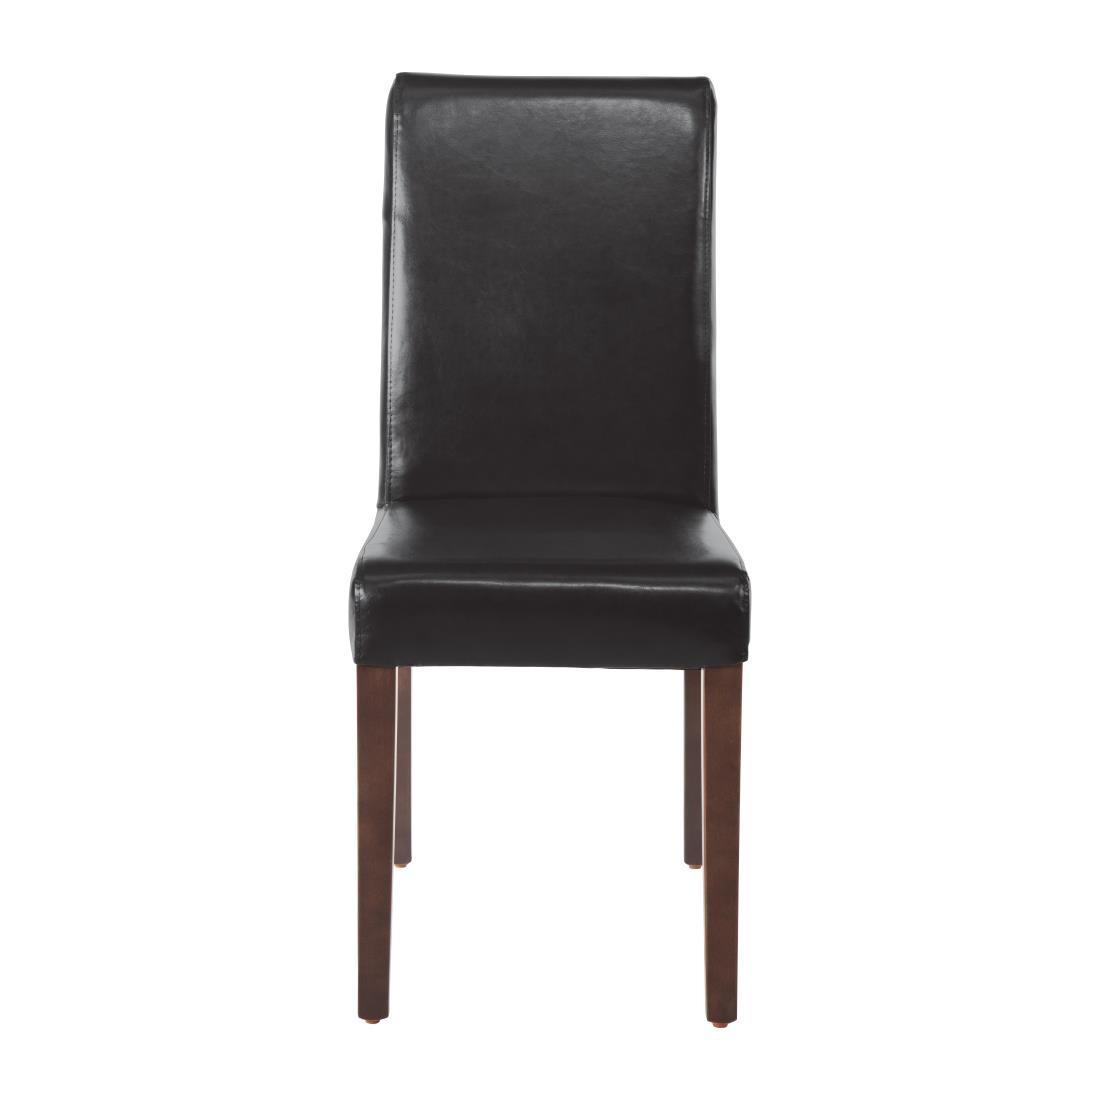 Bolero Faux Leather Dining Chair Black (Box 2) - GF954  - 2